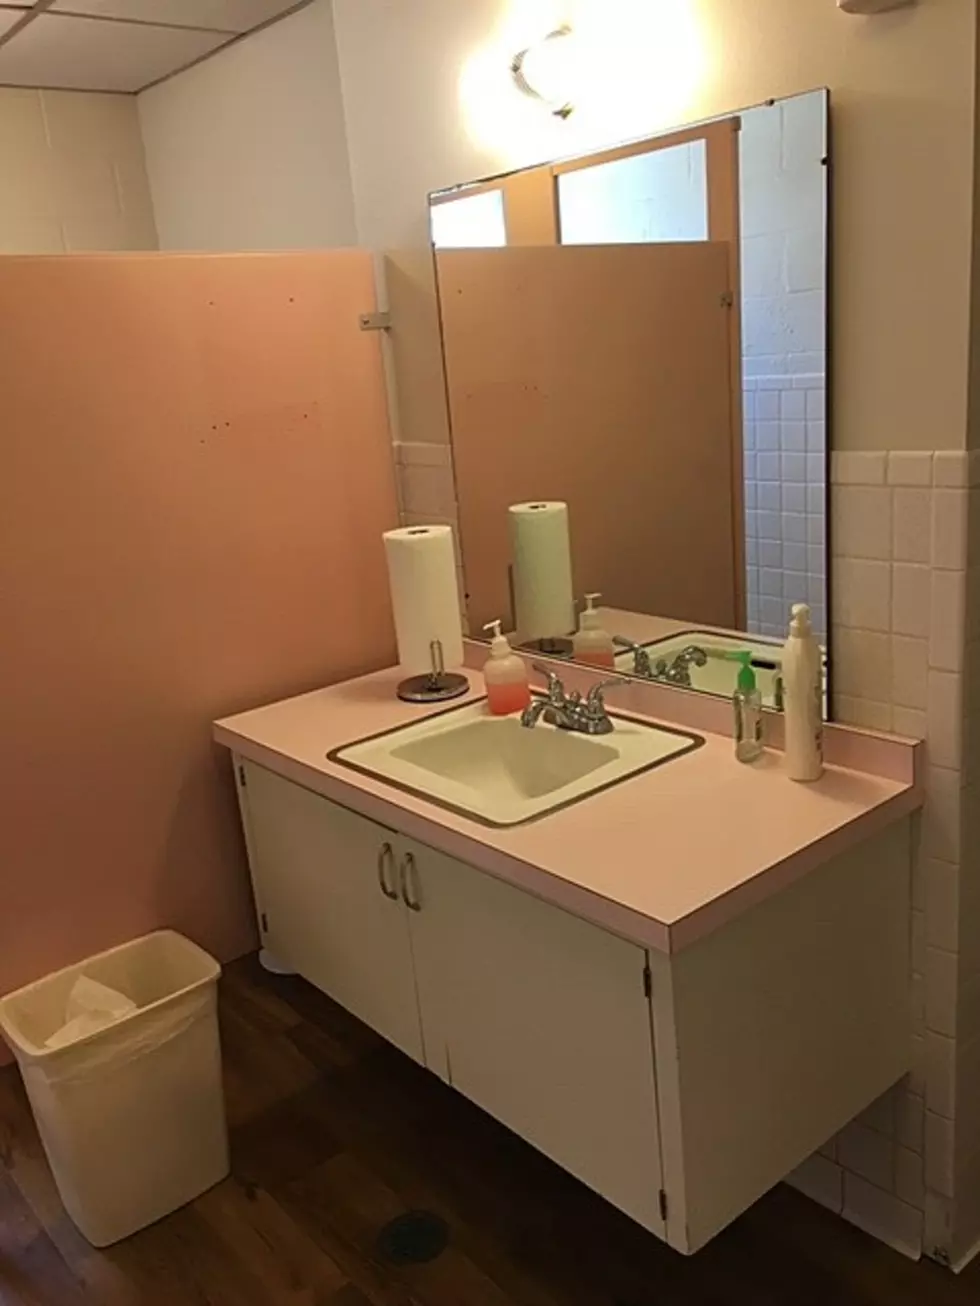 Restroom Renovation Revealed!  It&#8217;s Ah-mazzing! [SPONSORED]